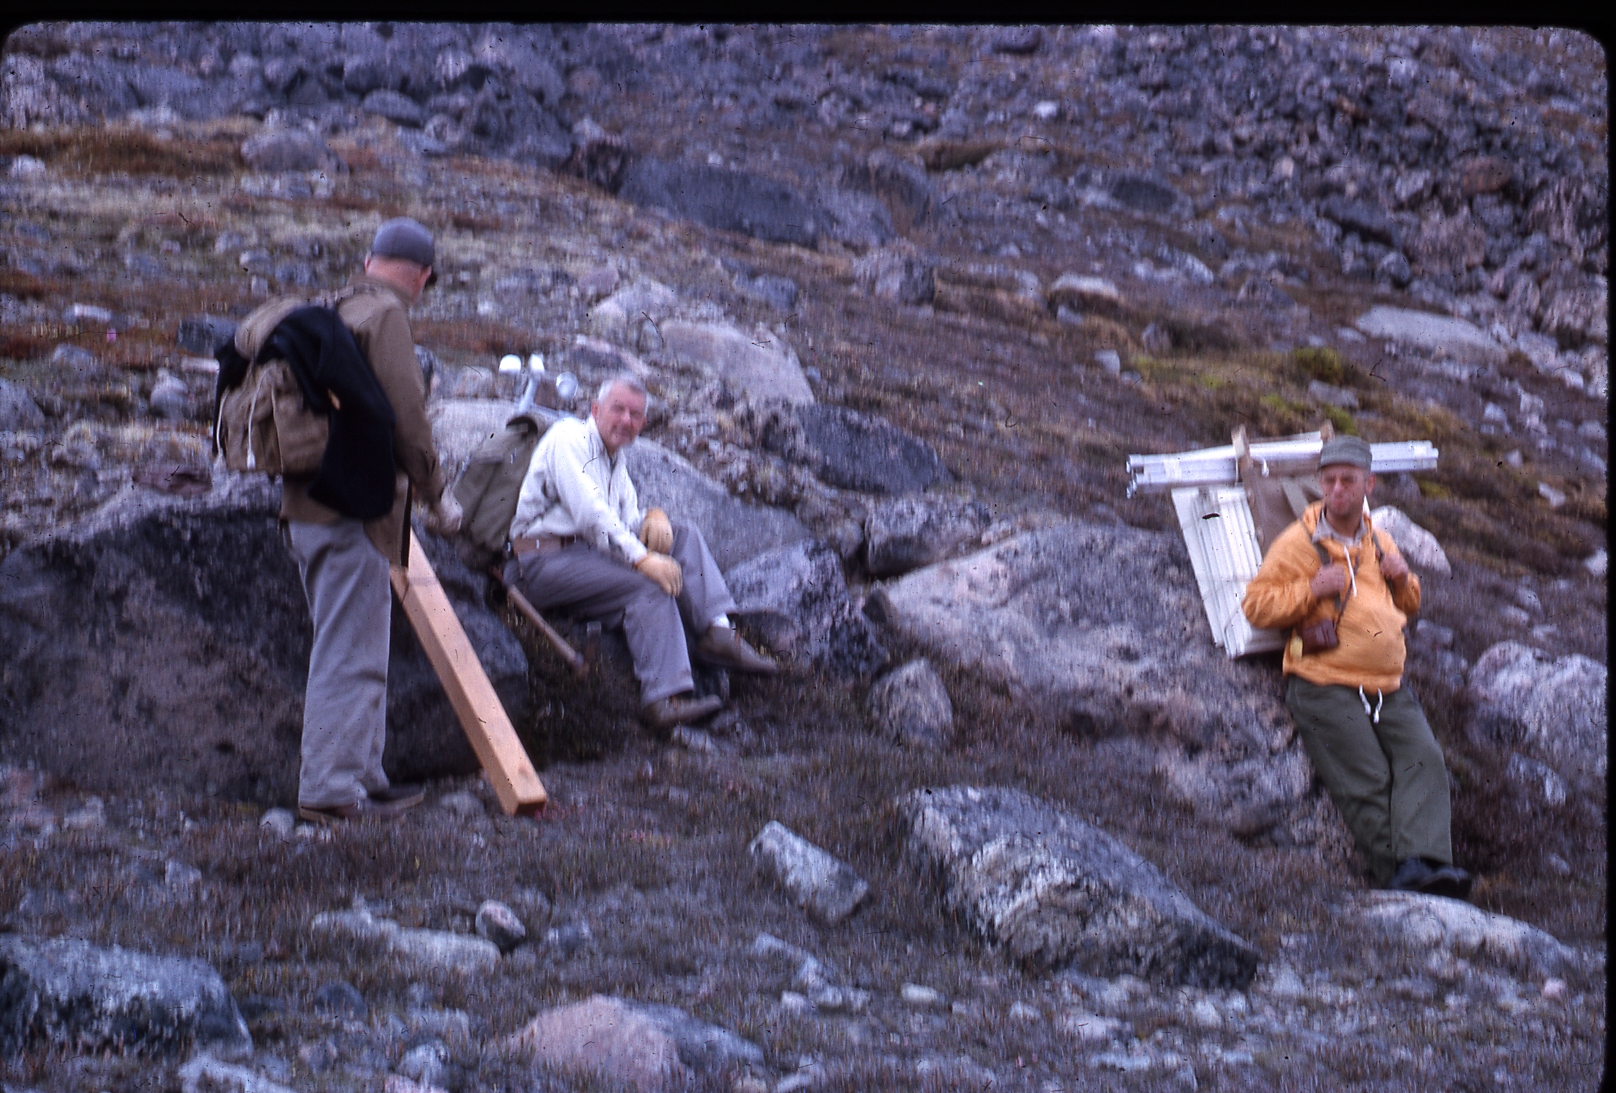 Three people in a rocky mountainous field raking a break, one sitting and one leaning on rocks.